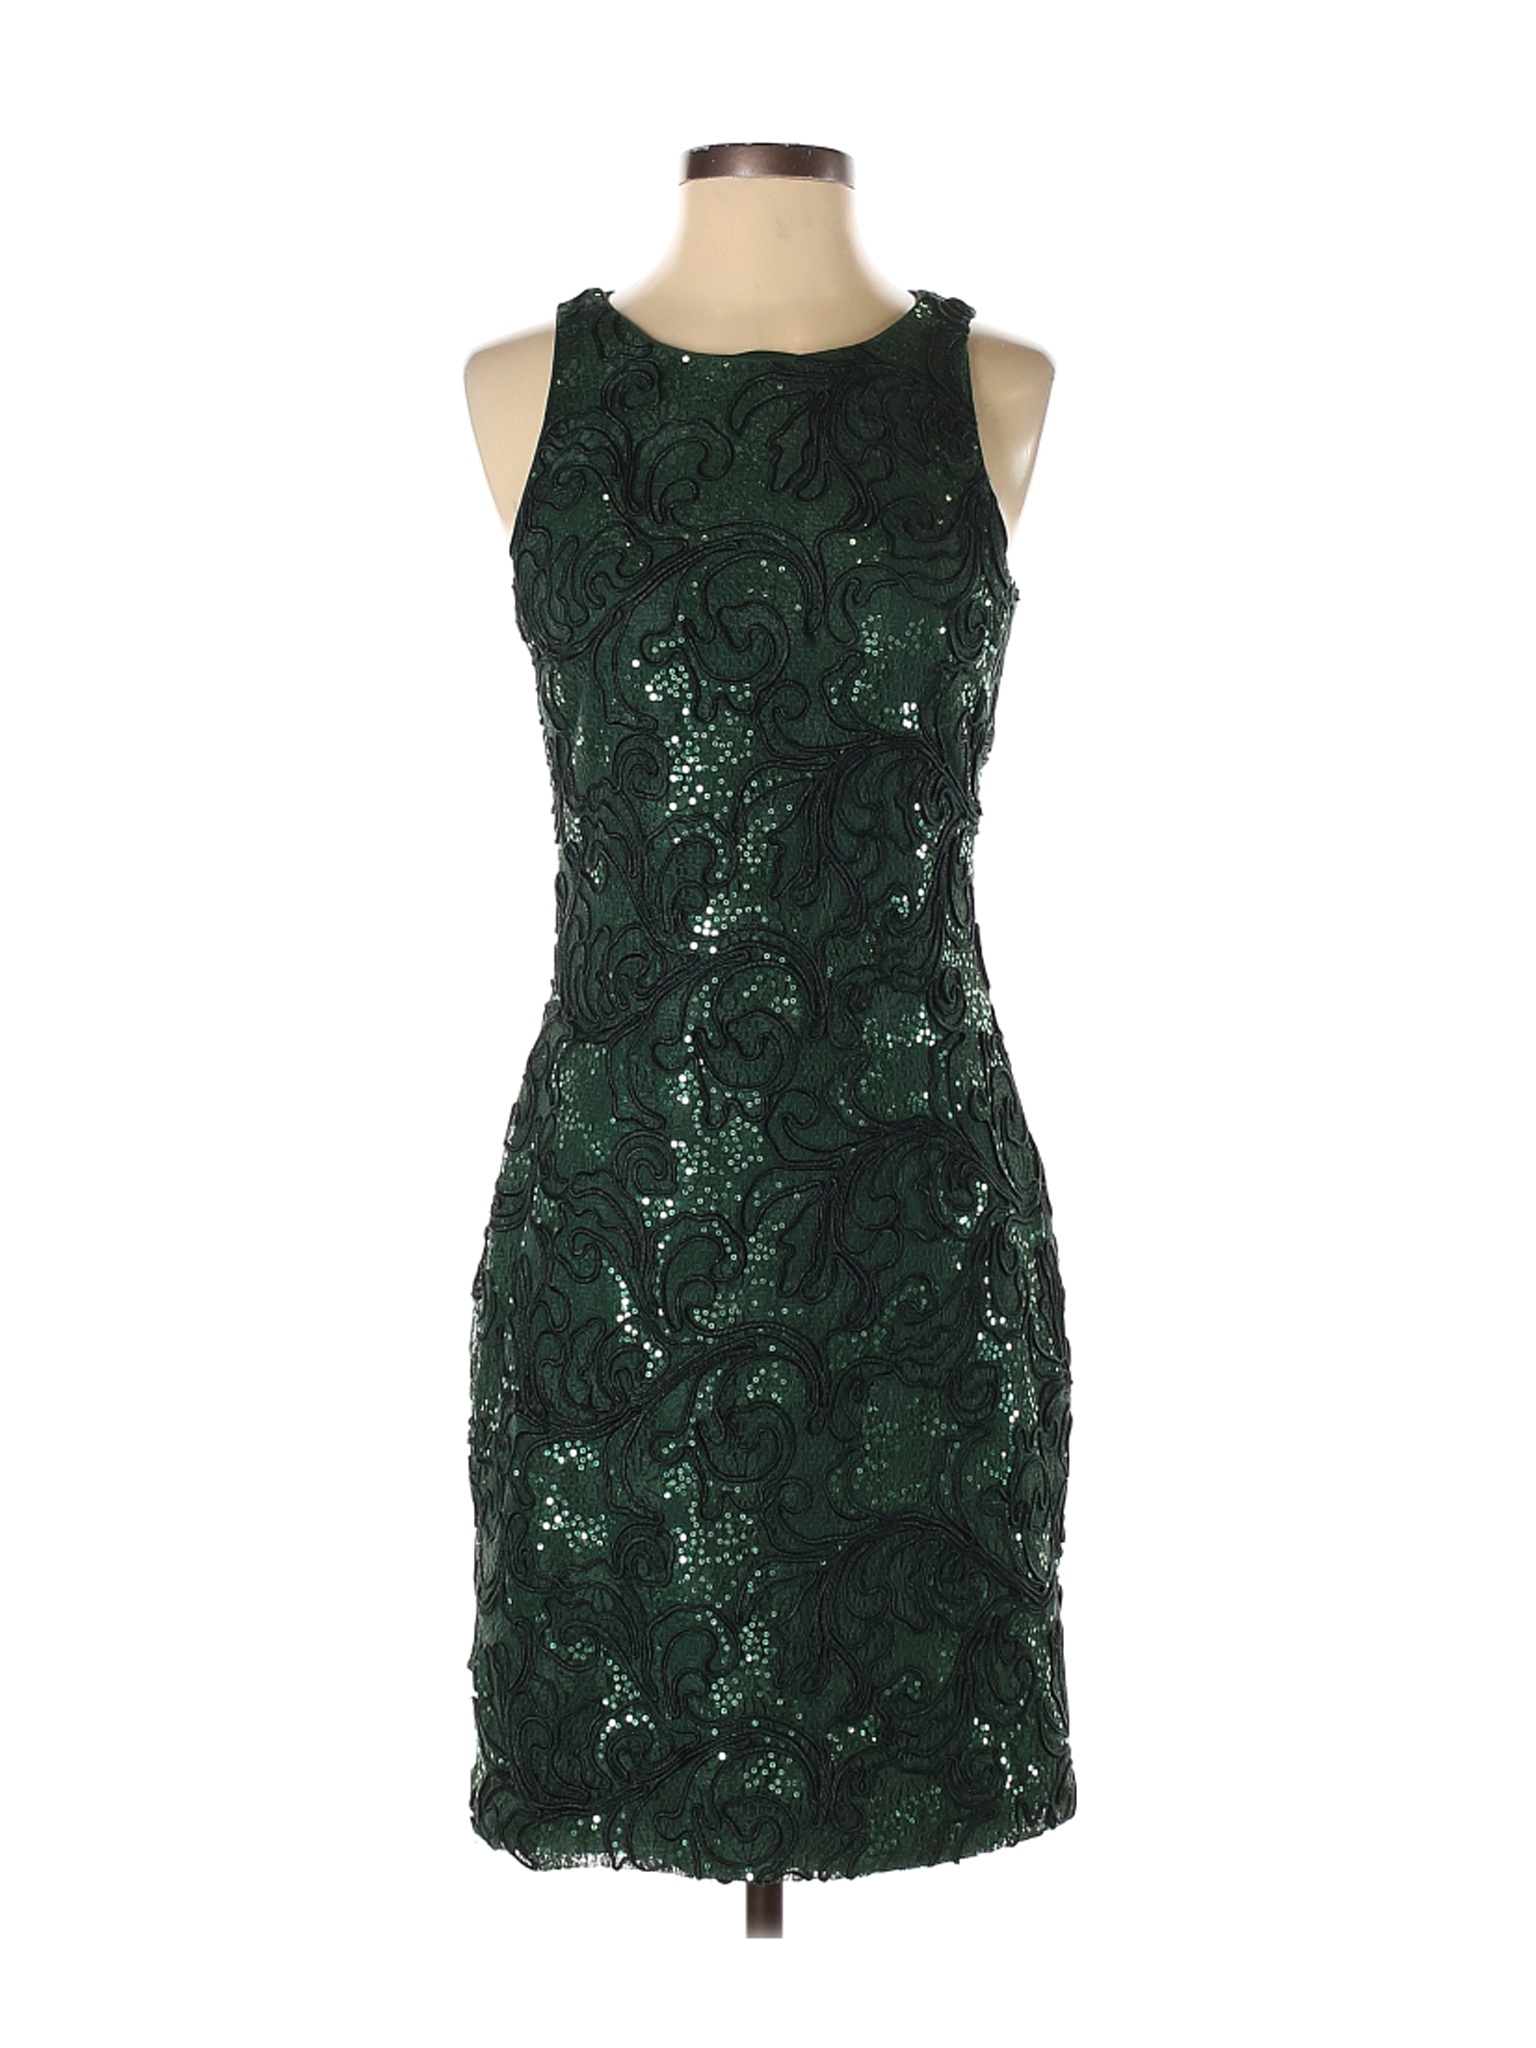 Belle Badgley Mischka Women Green Cocktail Dress 4 | eBay